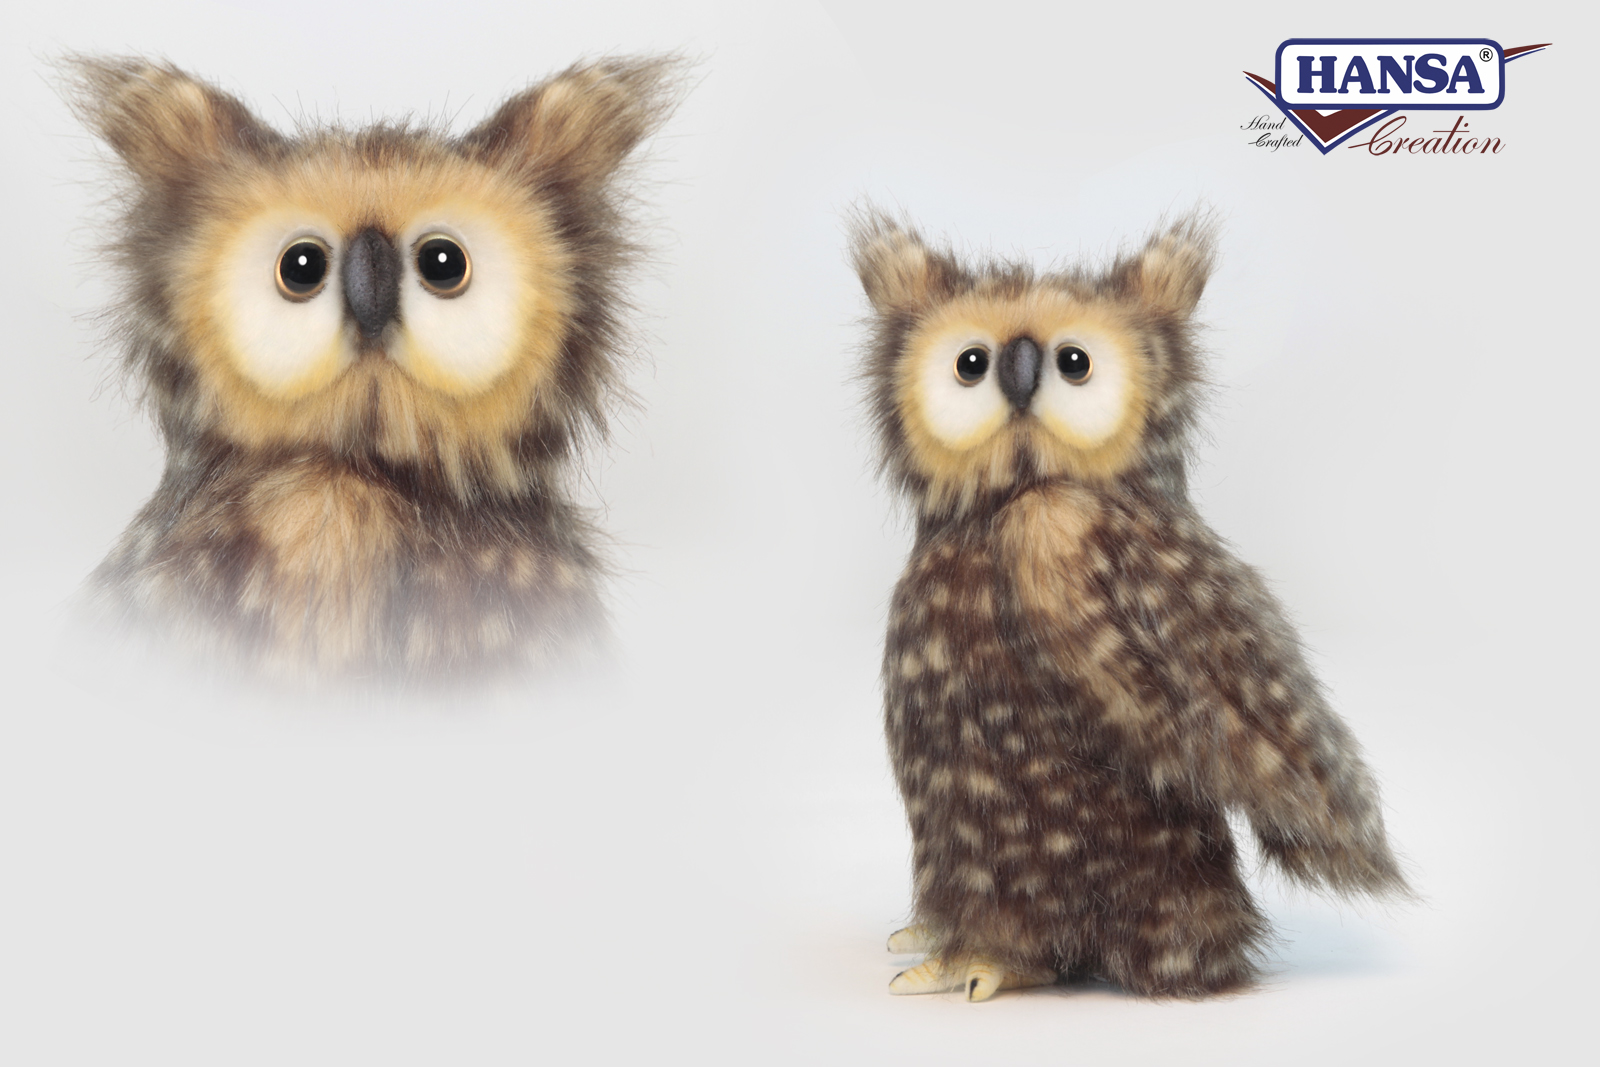 Owl Moving Head 24cmH Plush Soft Toy by Hansa